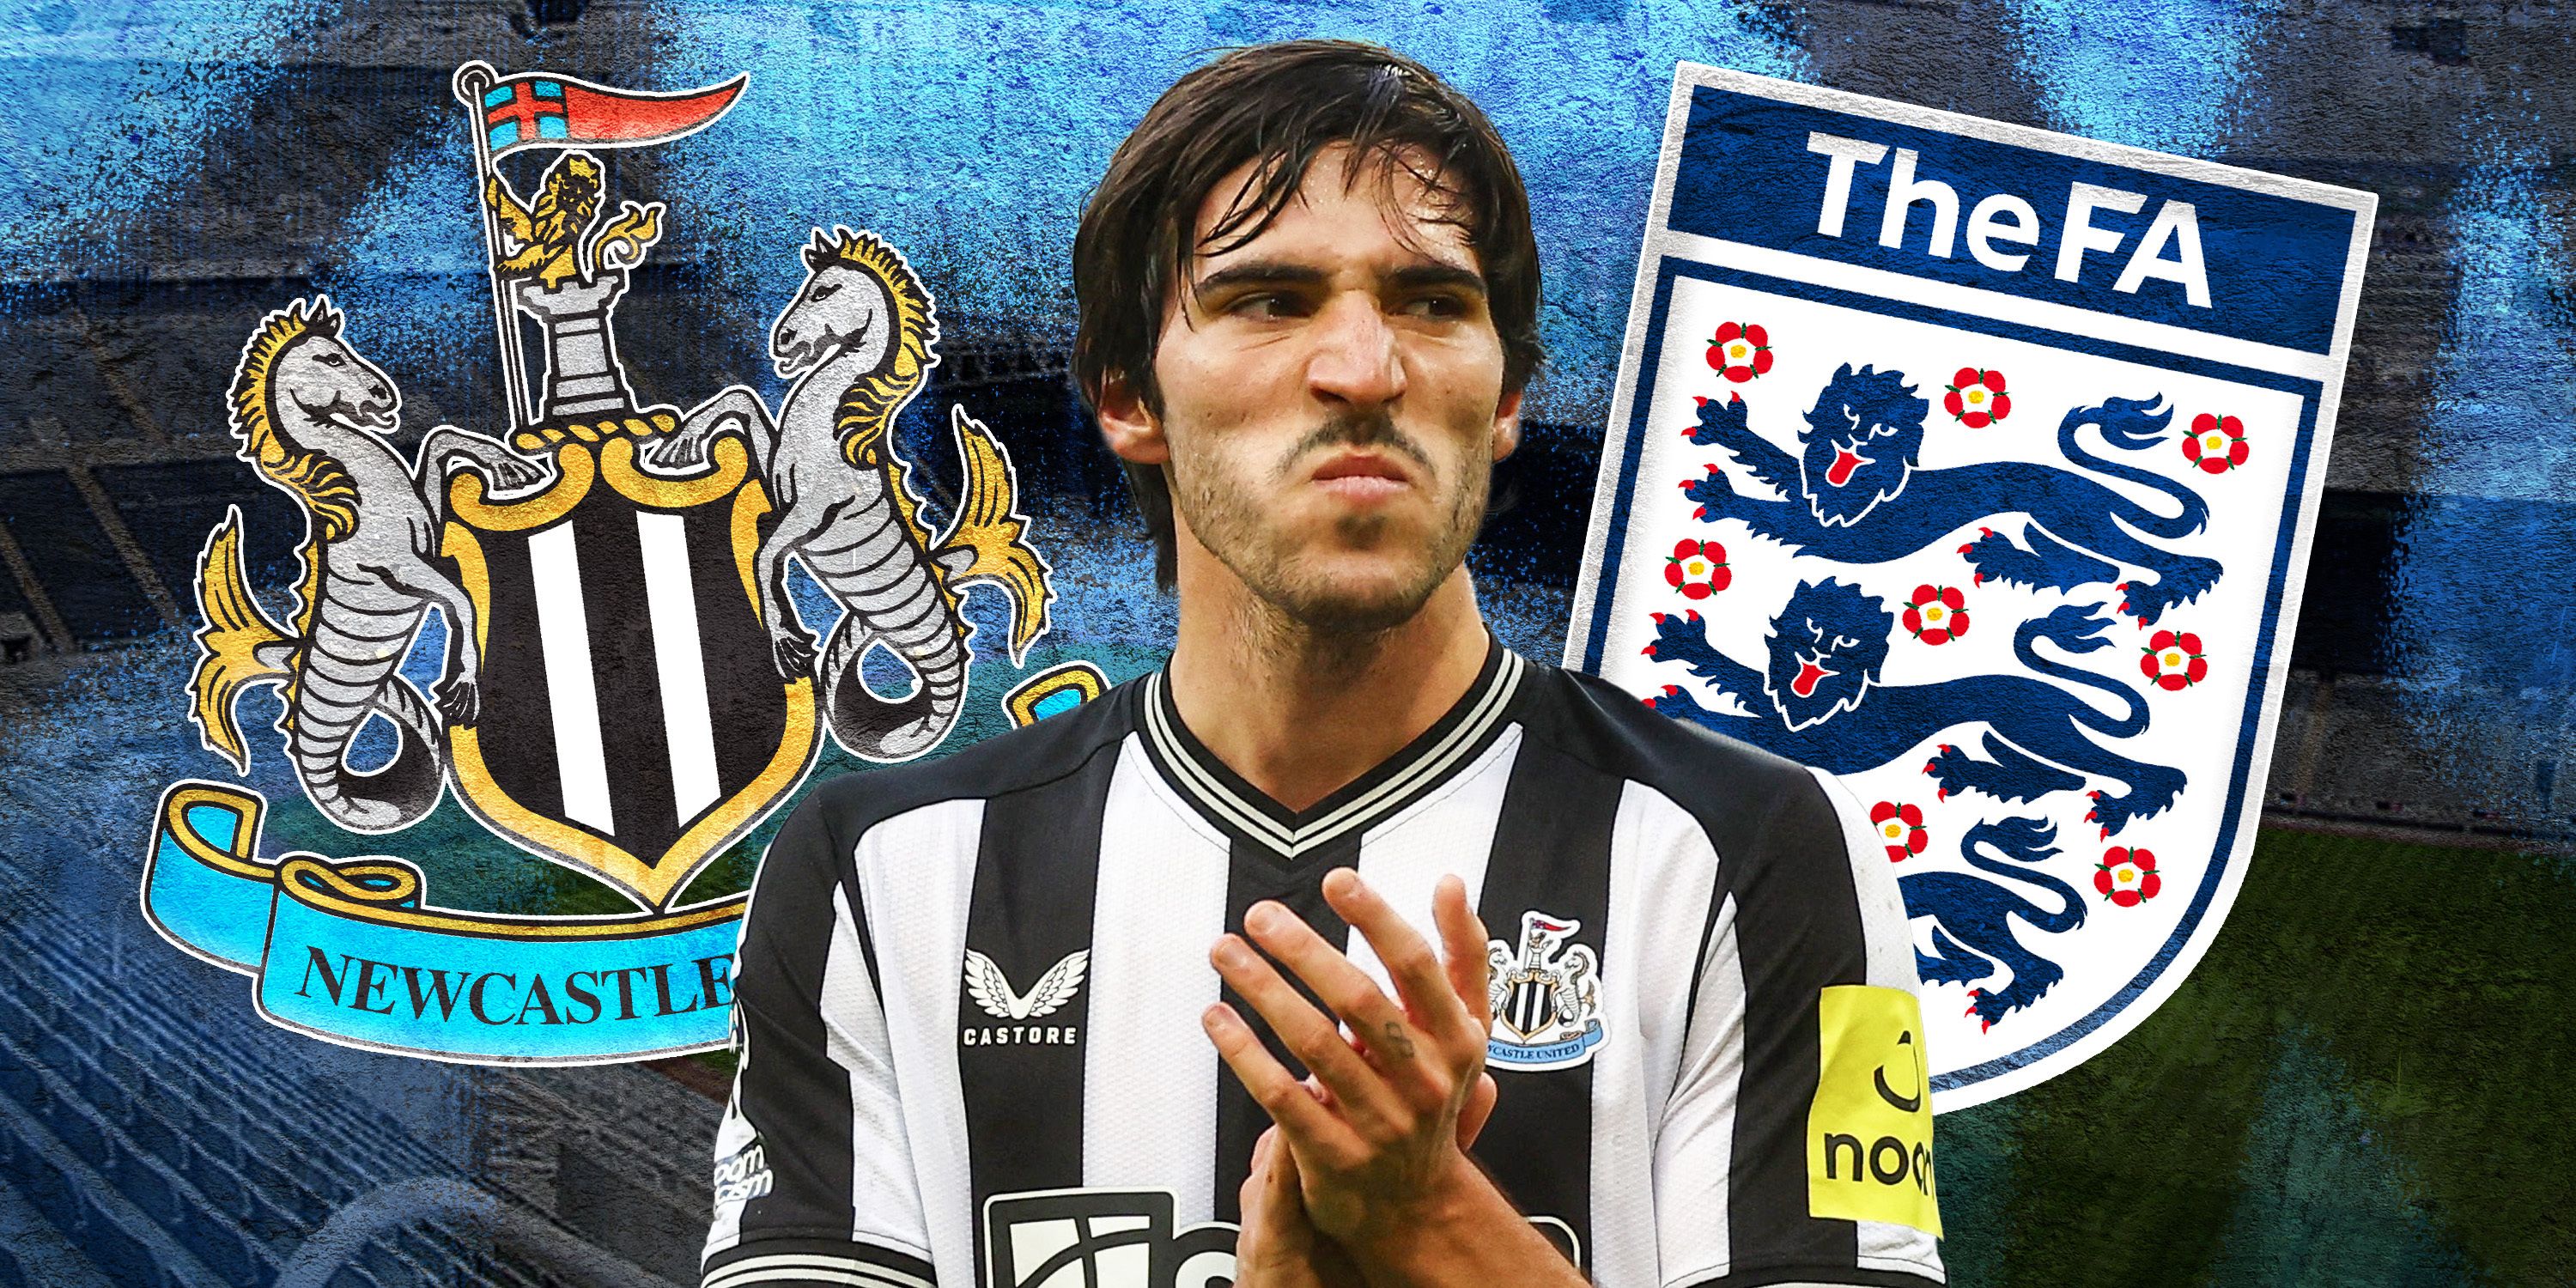 Sandro Tonali looking sad with Newcastle badge and the FA logo